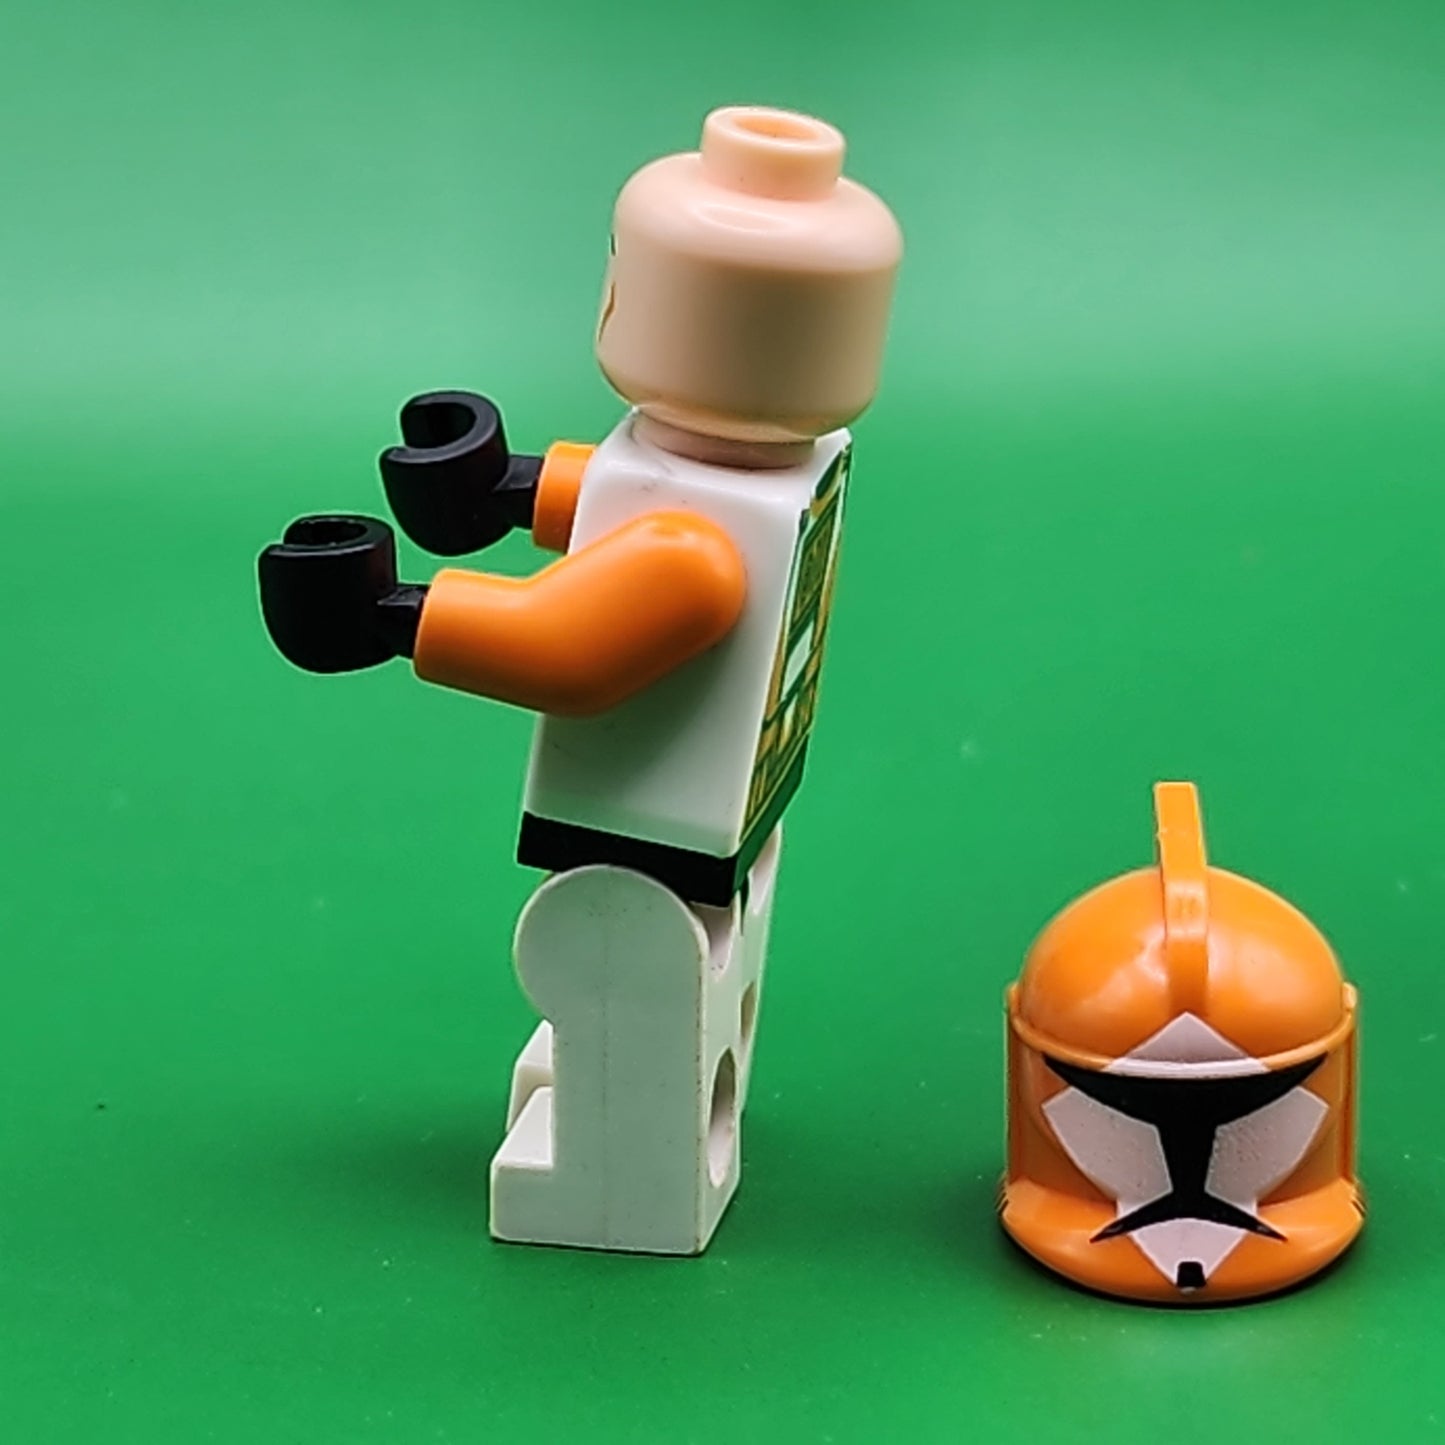 Lego Clone Bomb Squad Trooper sw0299 Phase 1 Large Eyes Minifigure Star Wars